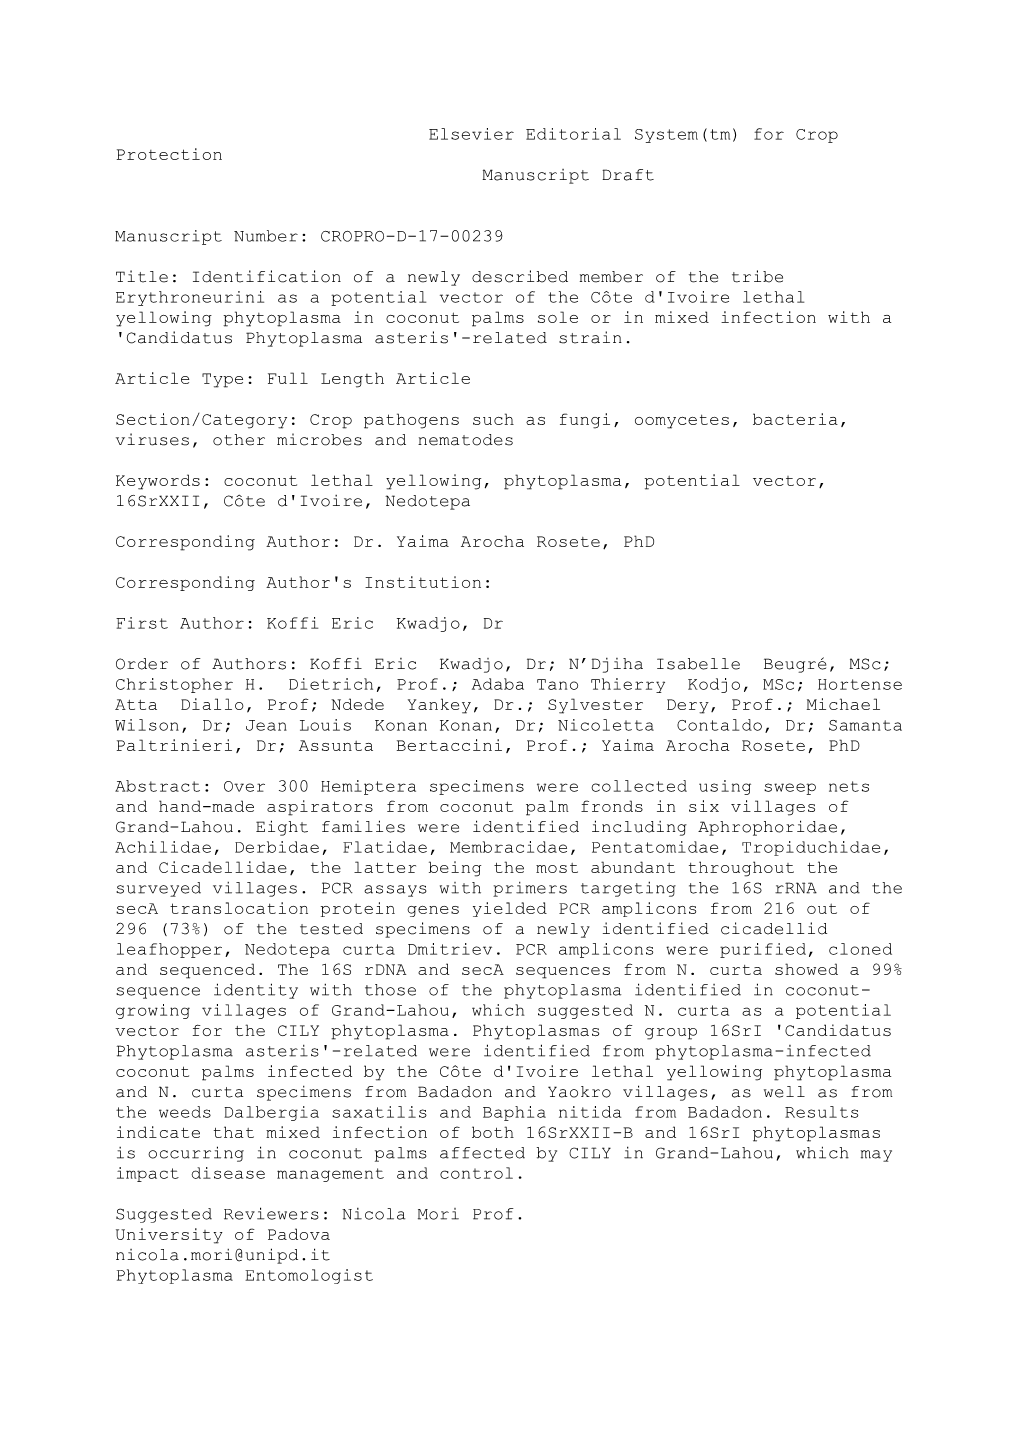 Elsevier Editorial System(Tm) for Crop Protection Manuscript Draft Manuscript Number: CROPRO-D-17-00239 Title: Identification Of